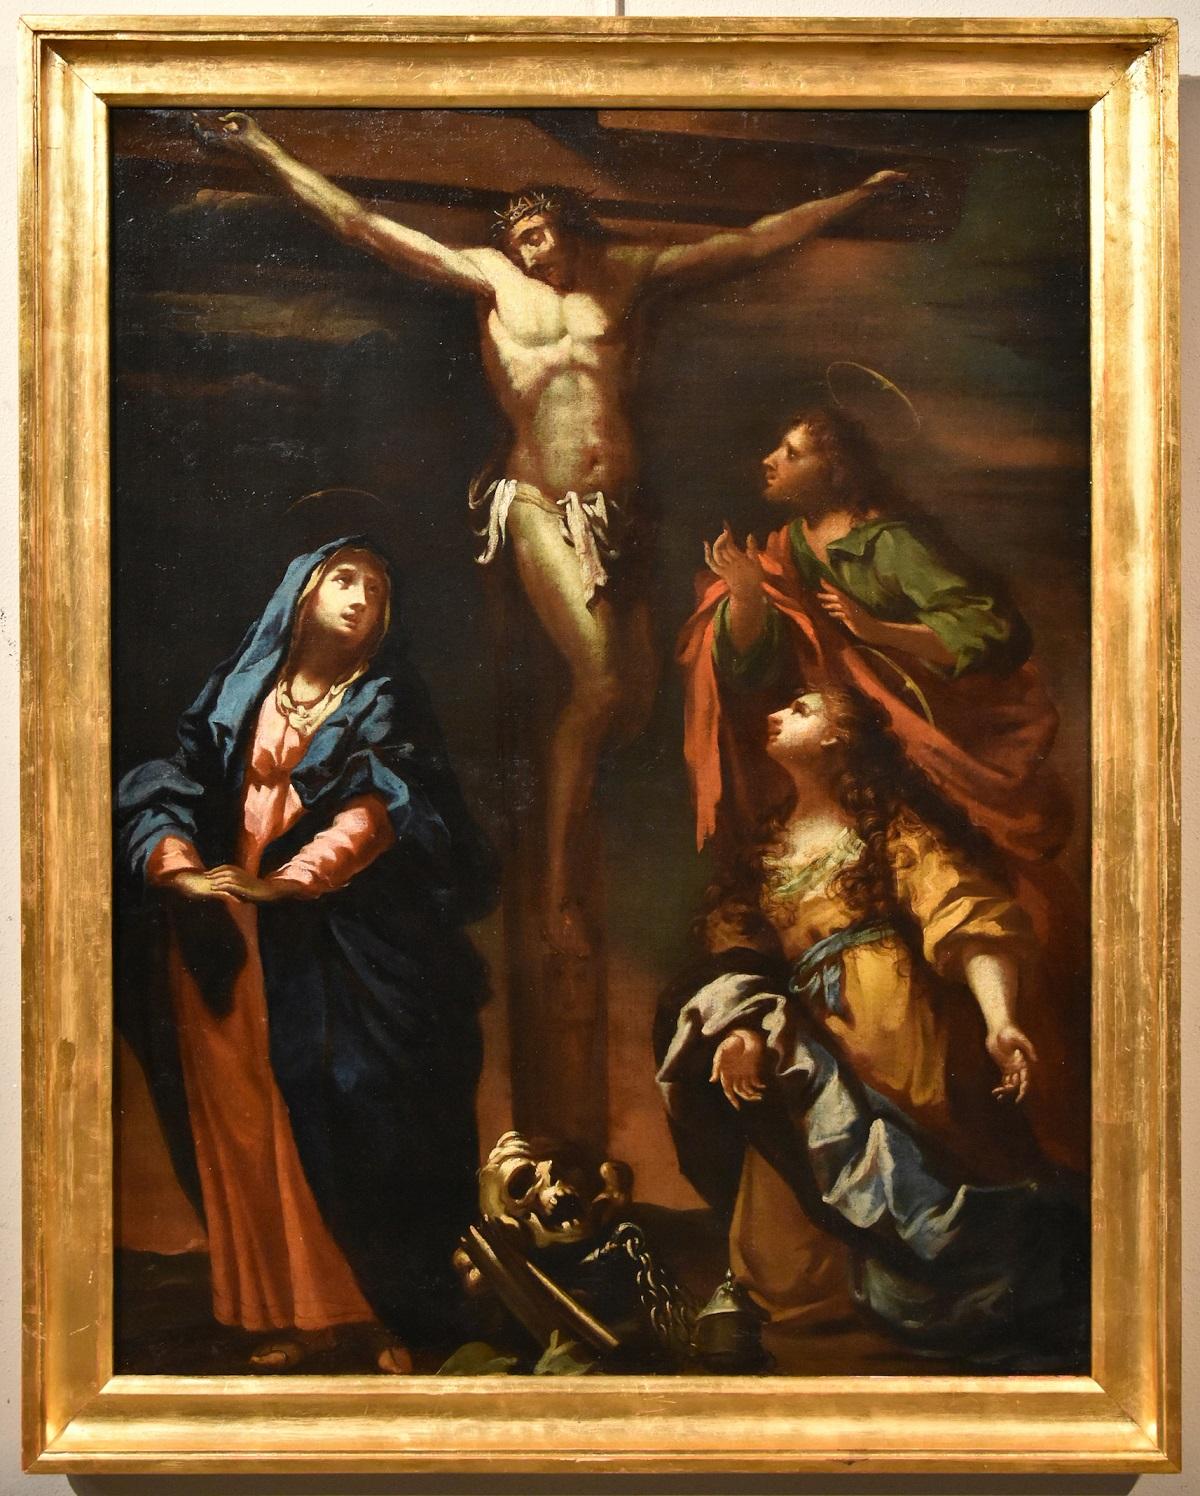  Giovanni Camillo Sagrestani (Florence, 1660 - 1731) Landscape Painting – Christ, Kreuzigung, Sagrestani, Gemälde, Öl auf Leinwand, Alter Meister, 17./18. Jahrhundert, Italien